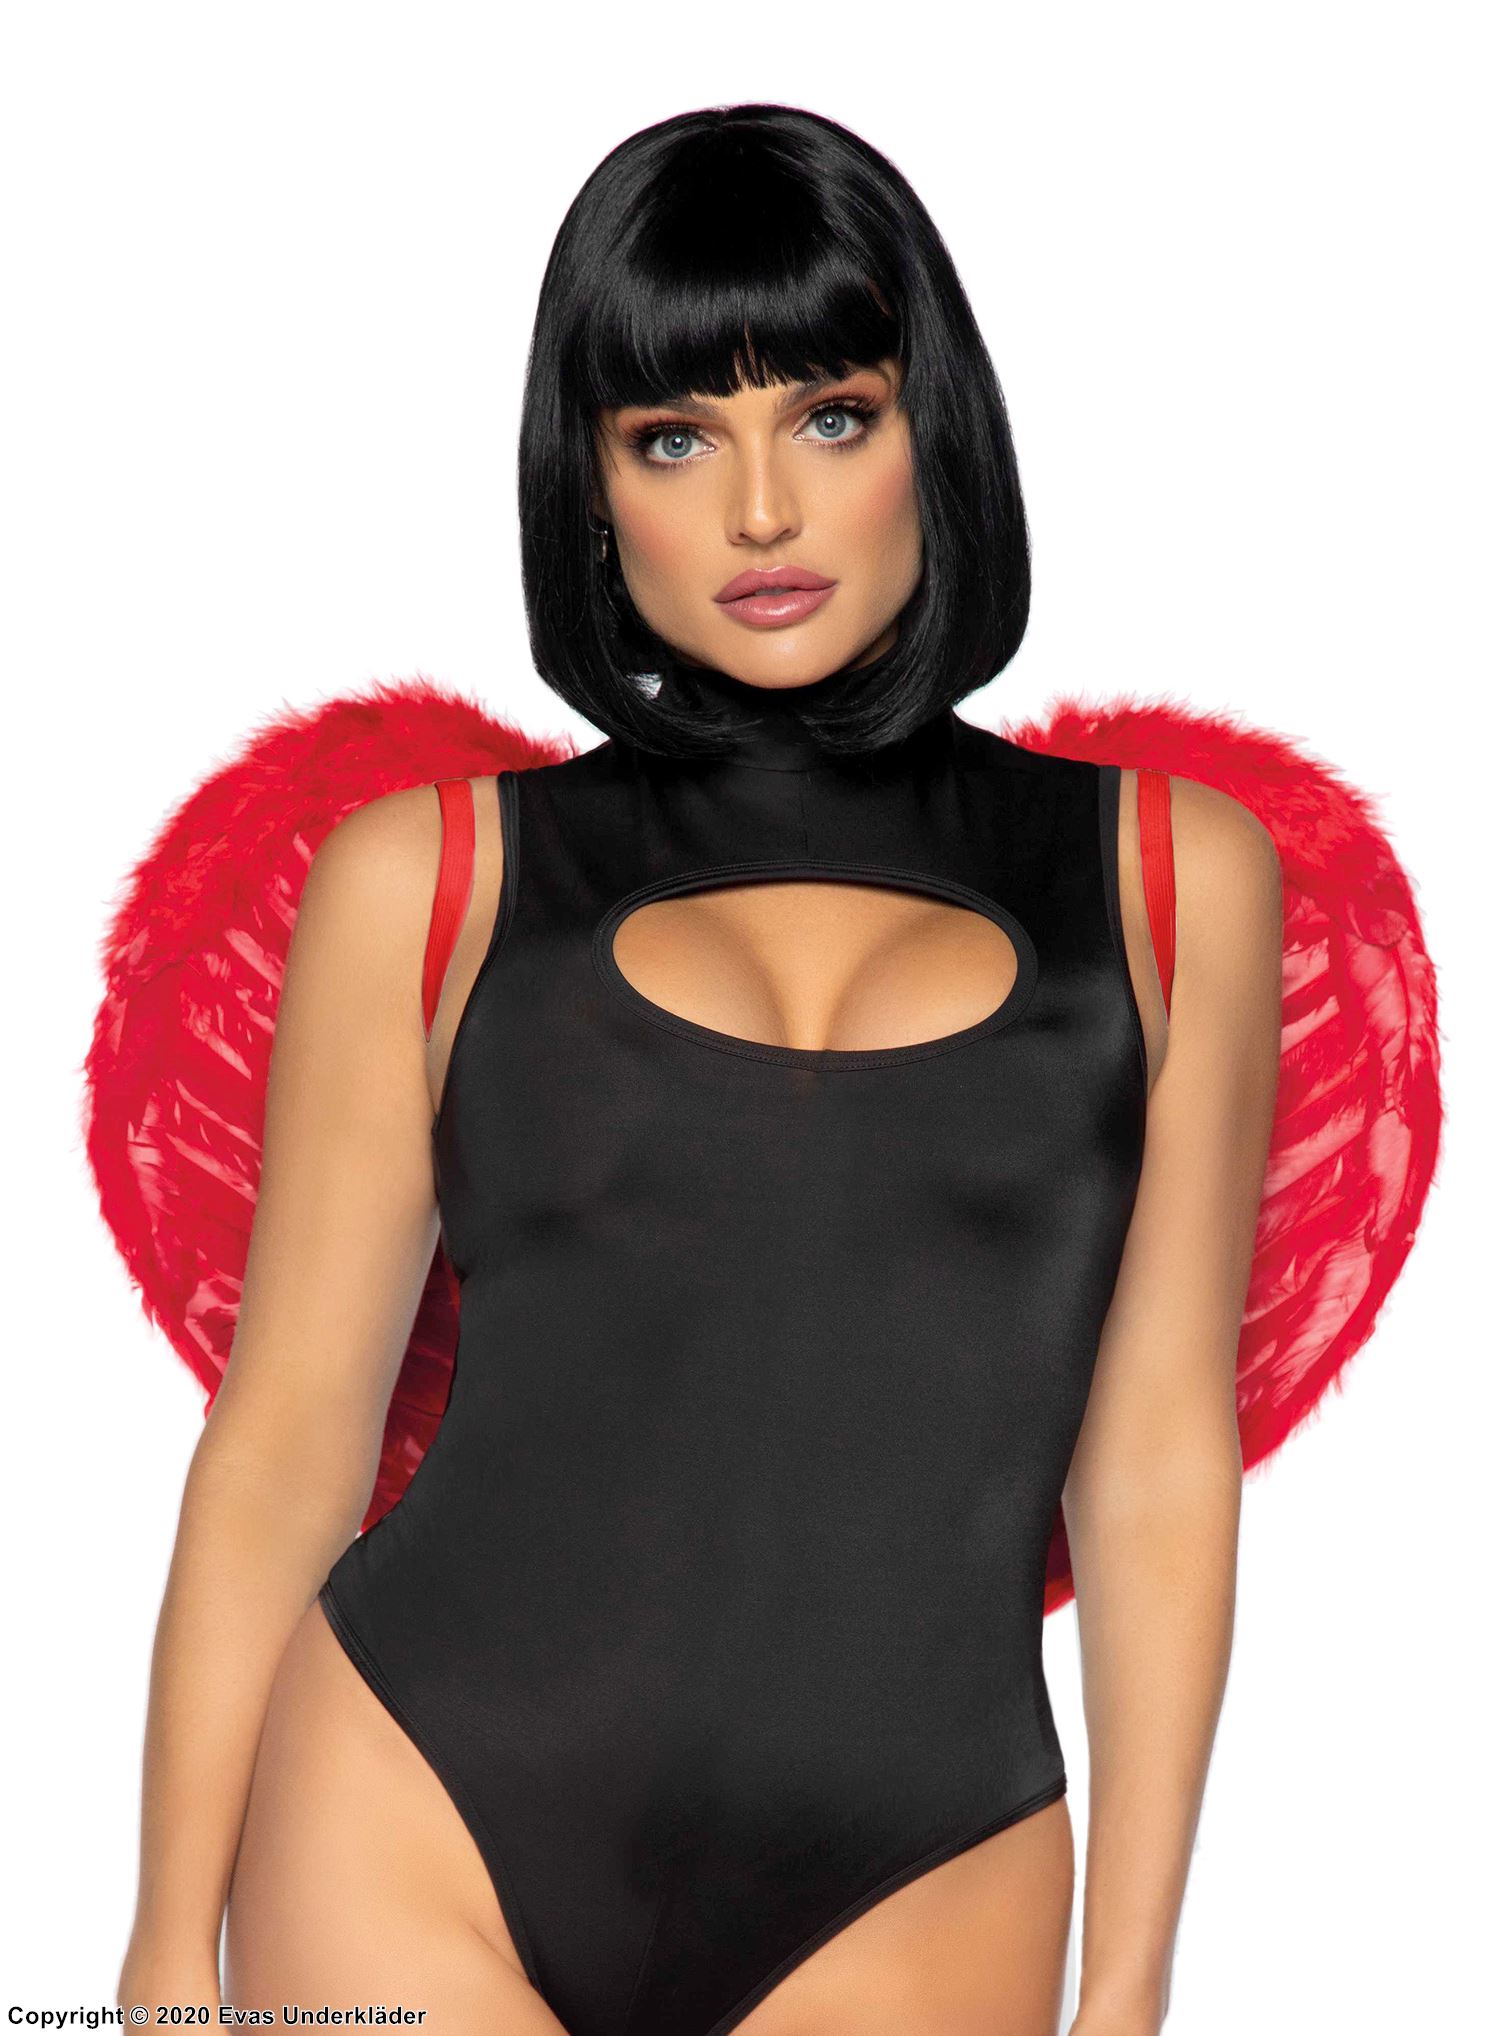 Female devil, costume wings, marabou trim, feathers